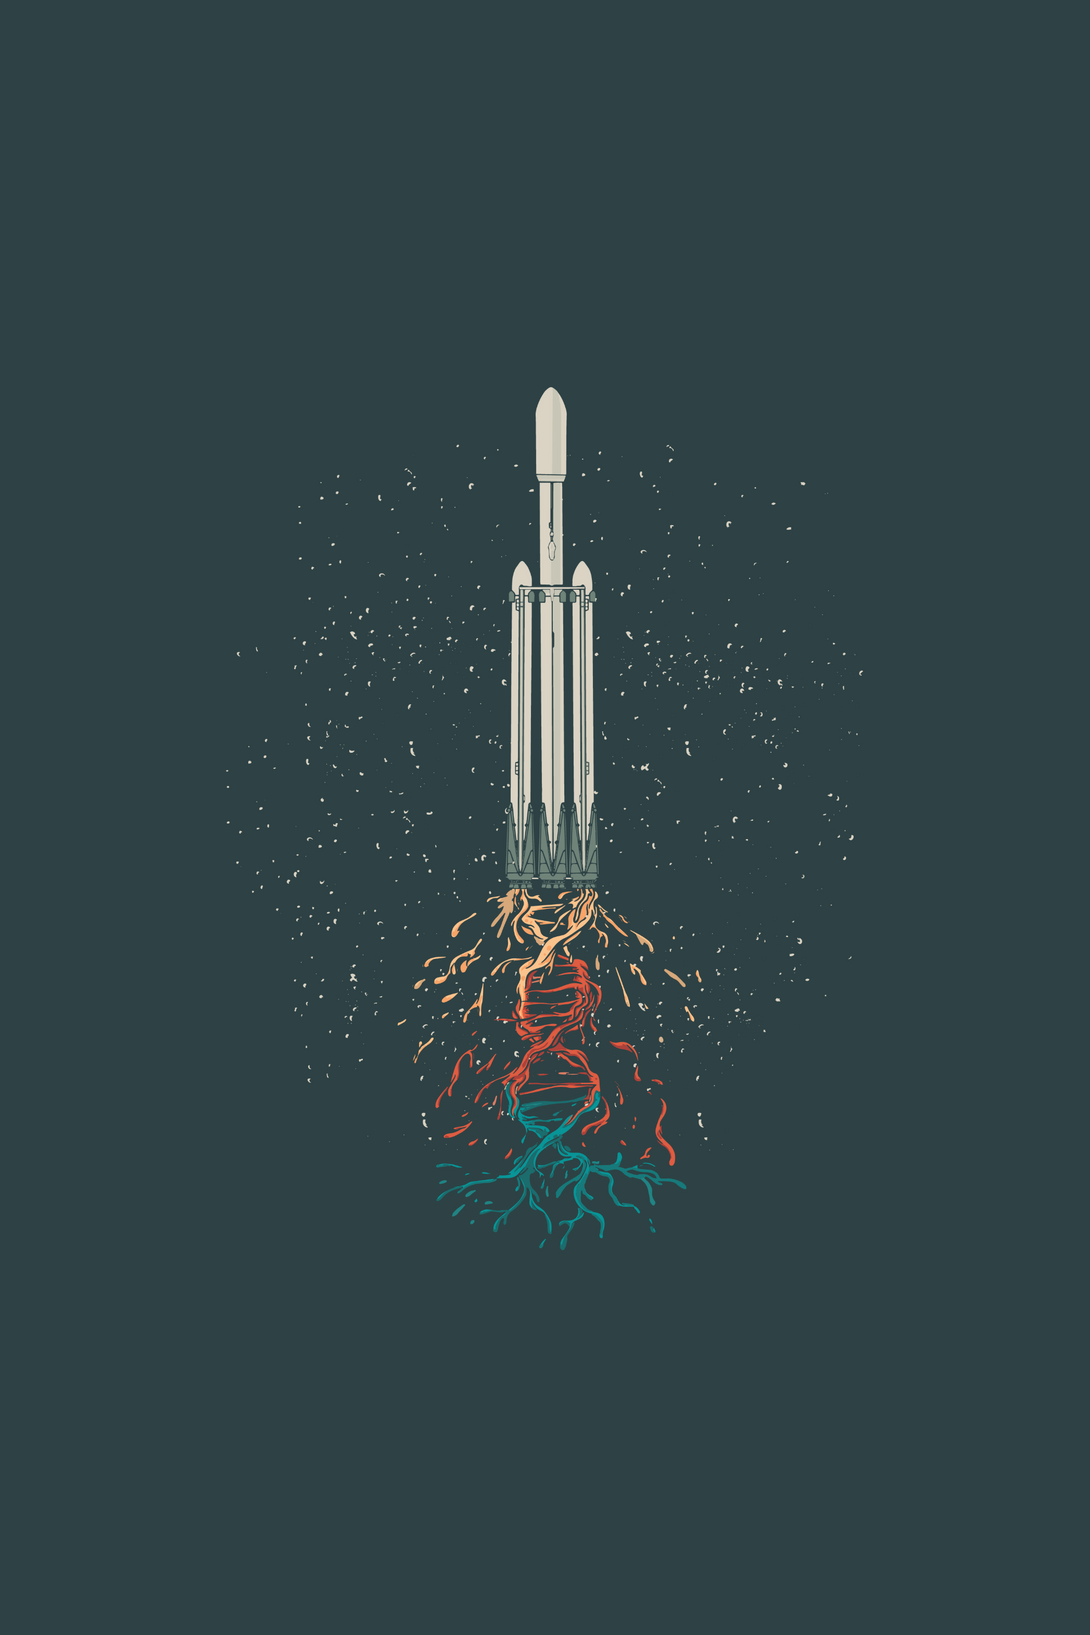 Space Rocket Printed T-Shirt For Men - WowWaves - 1